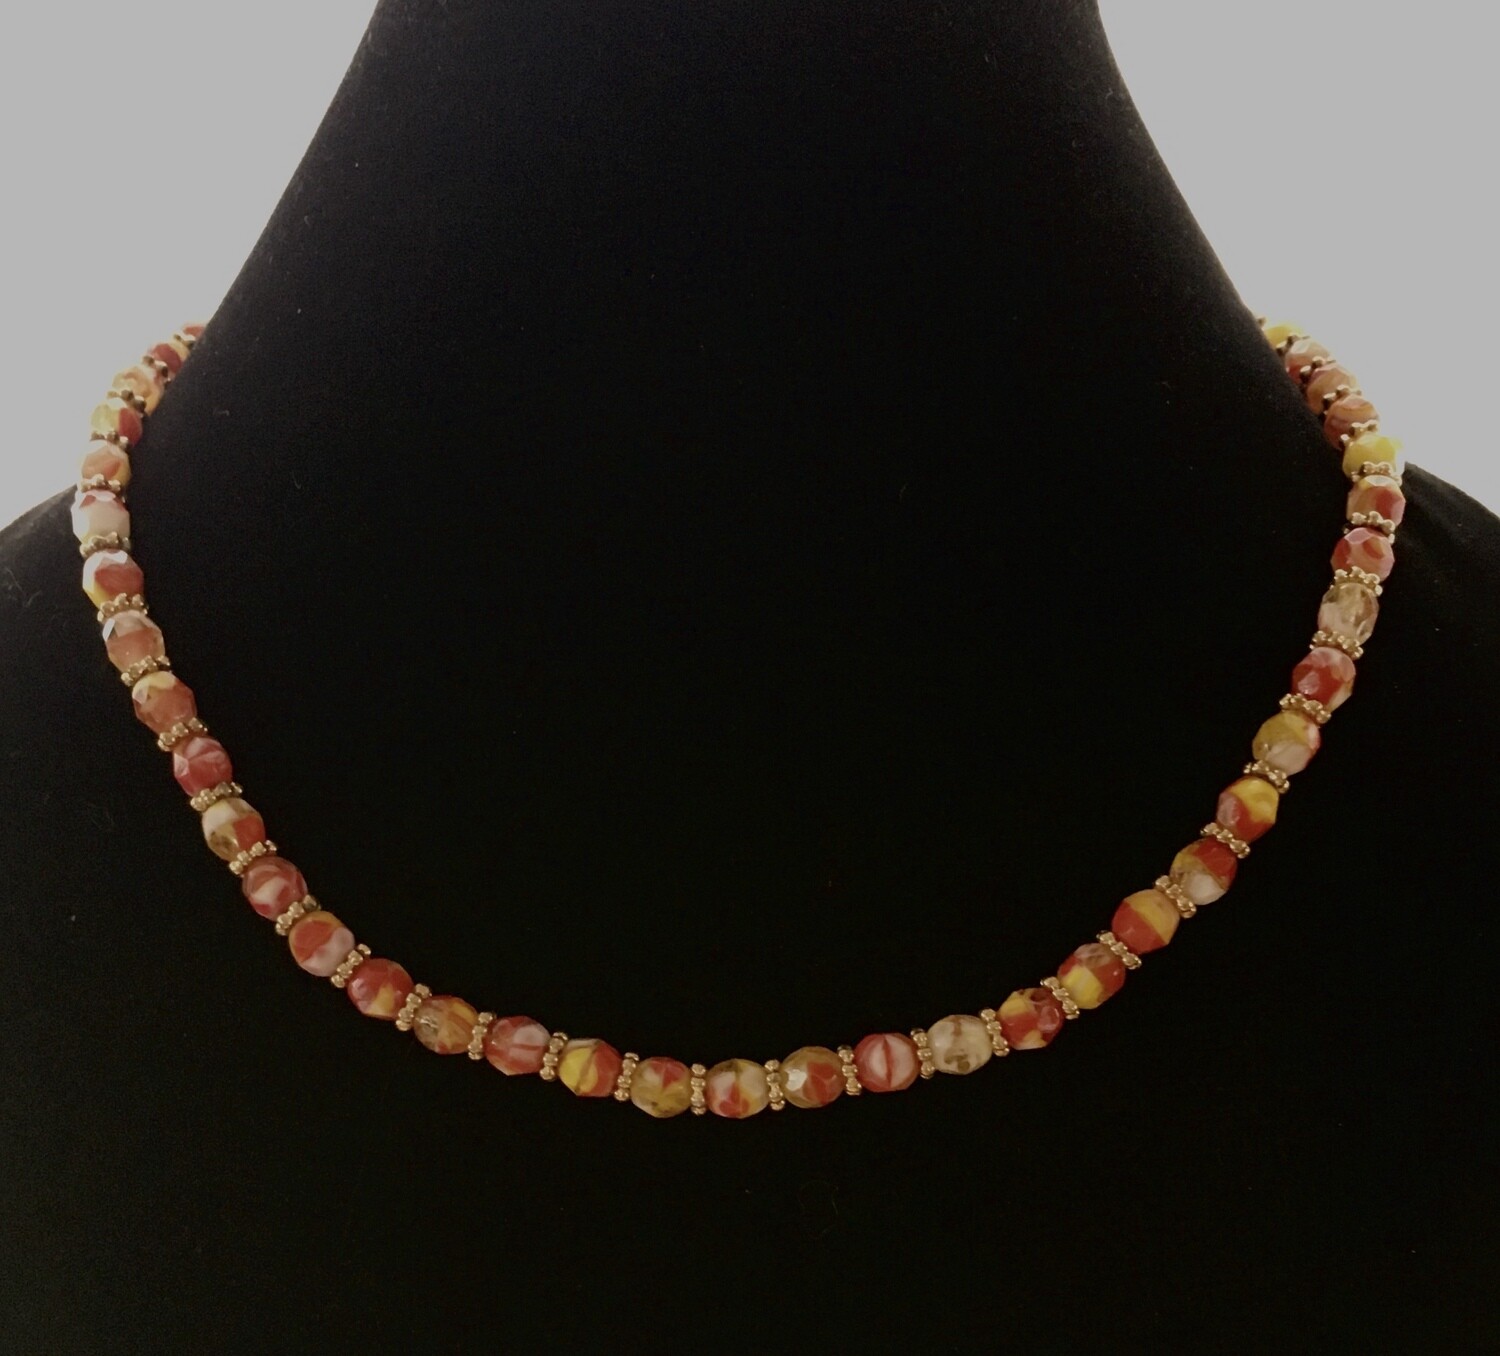 Peach coloured agate necklace